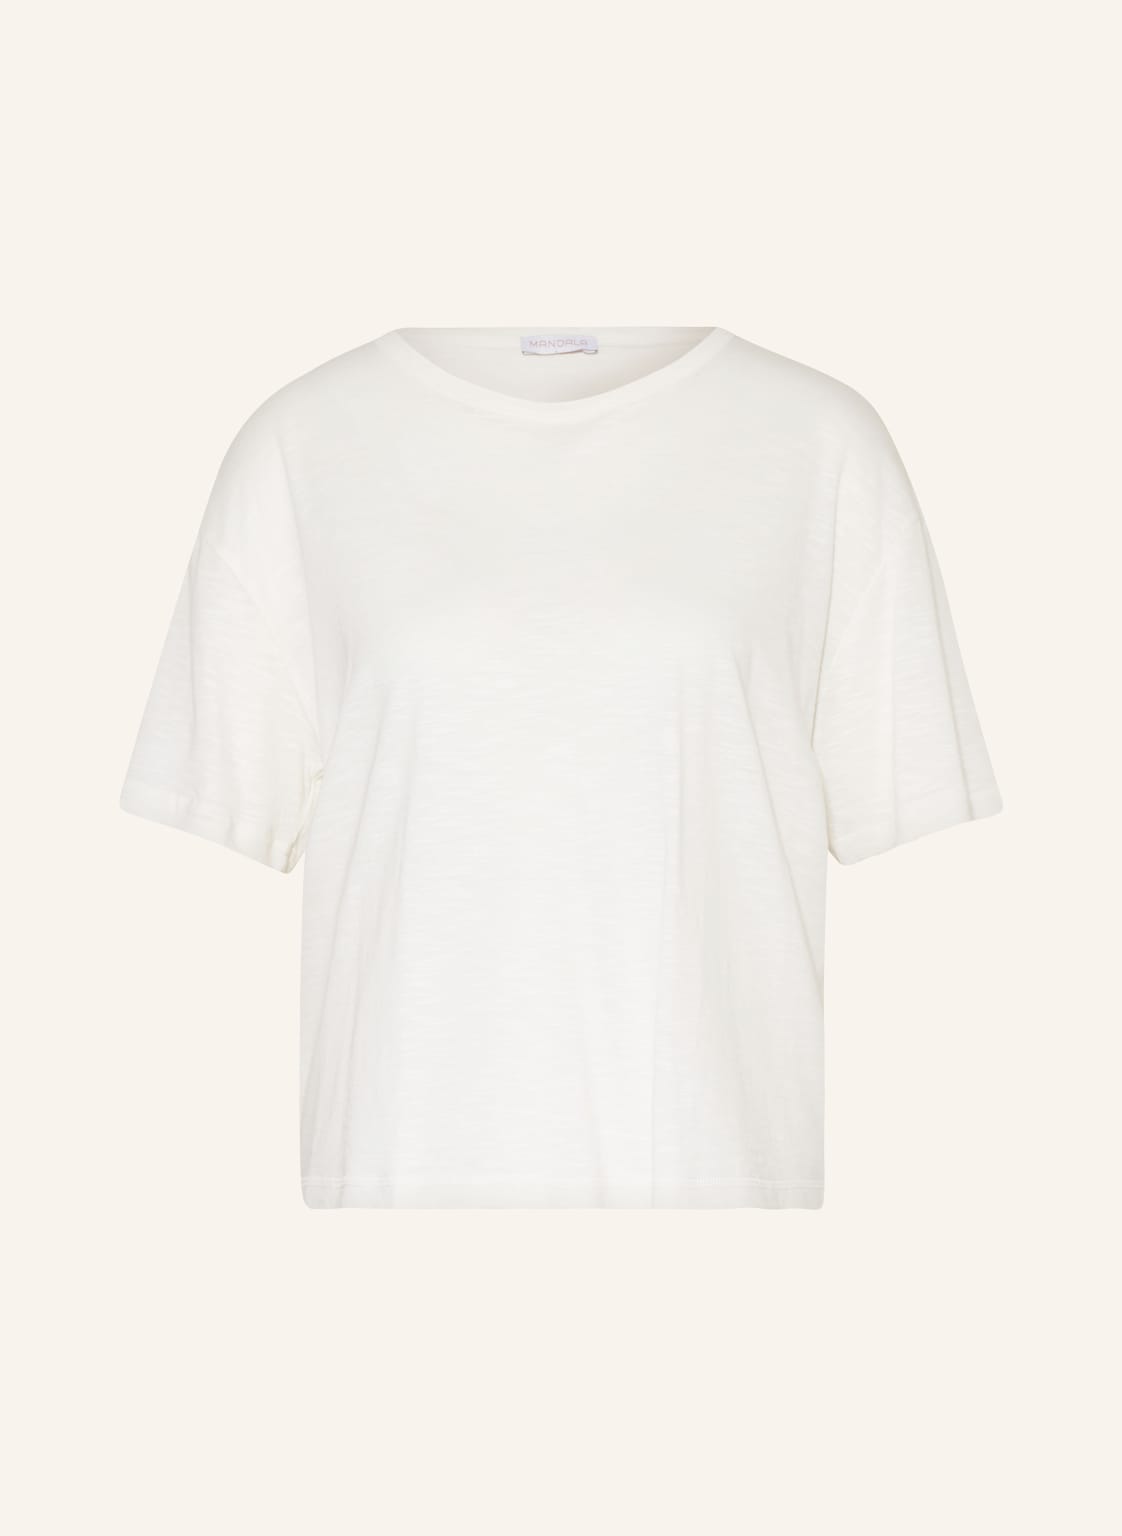 Mandala T-Shirt weiss von mandala